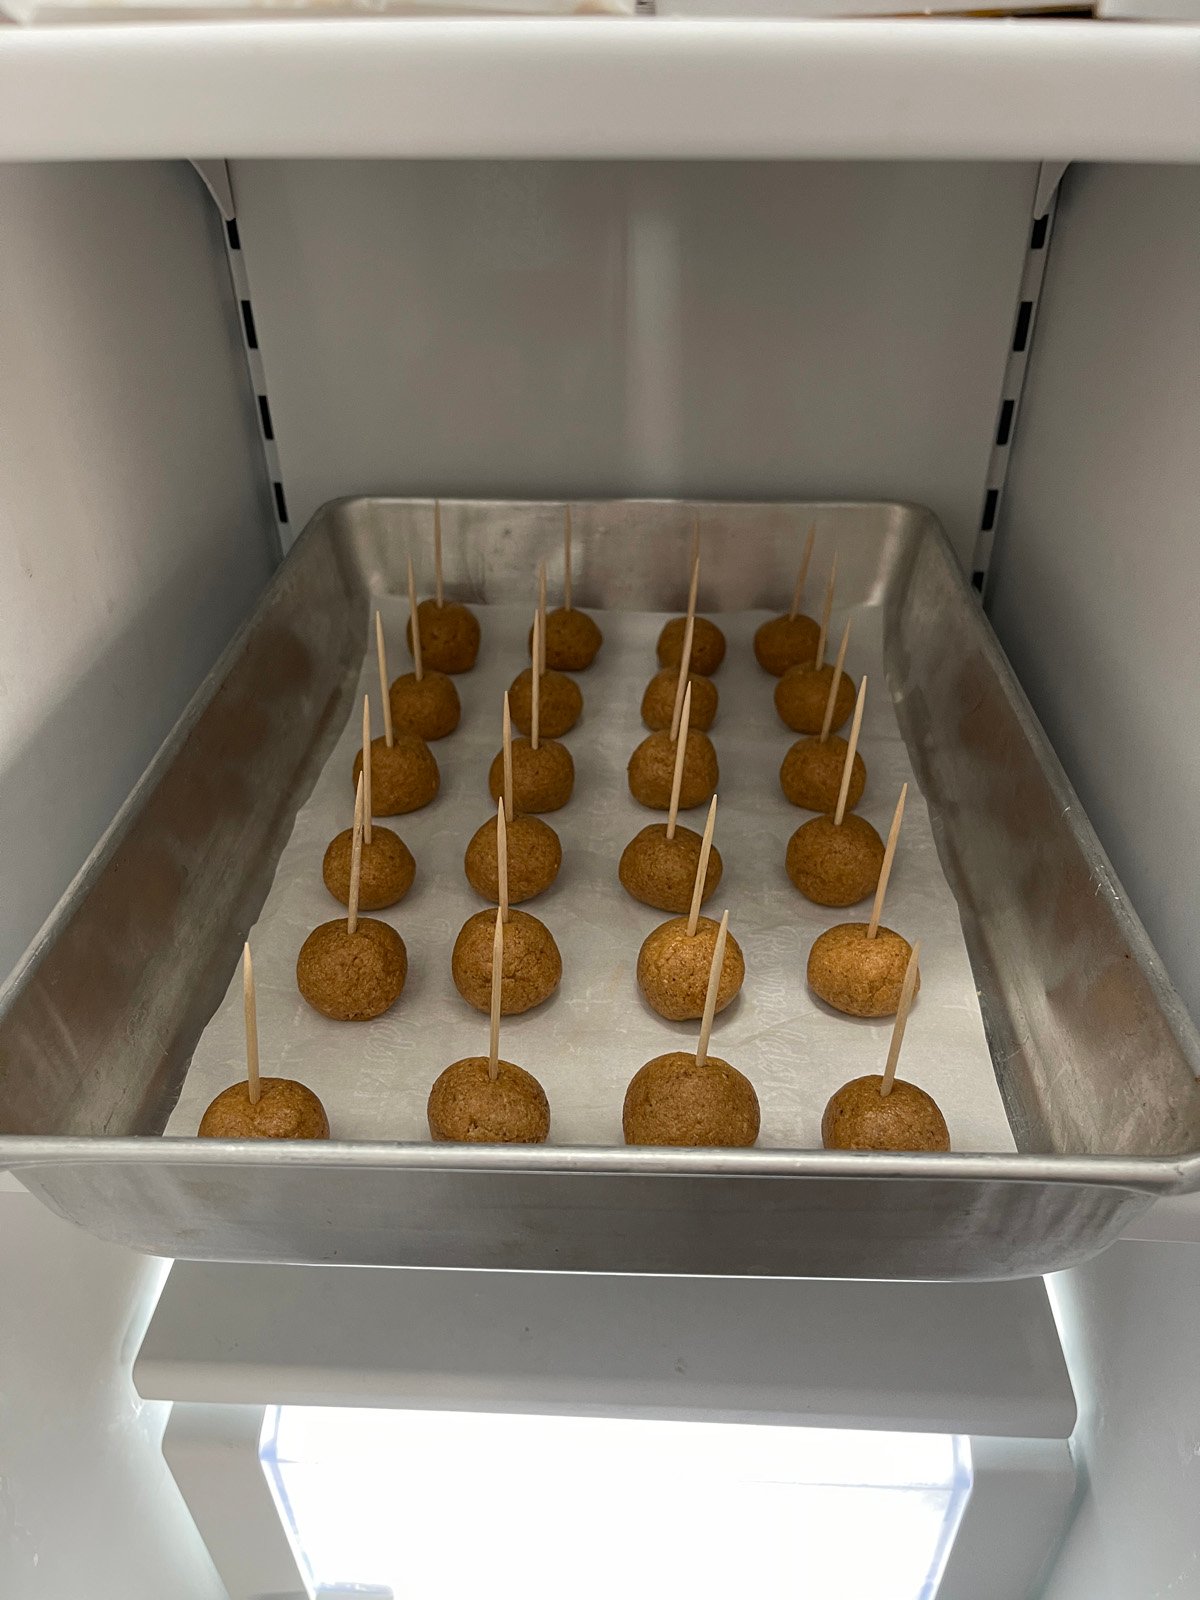 Peanut butter balls in the freezer.